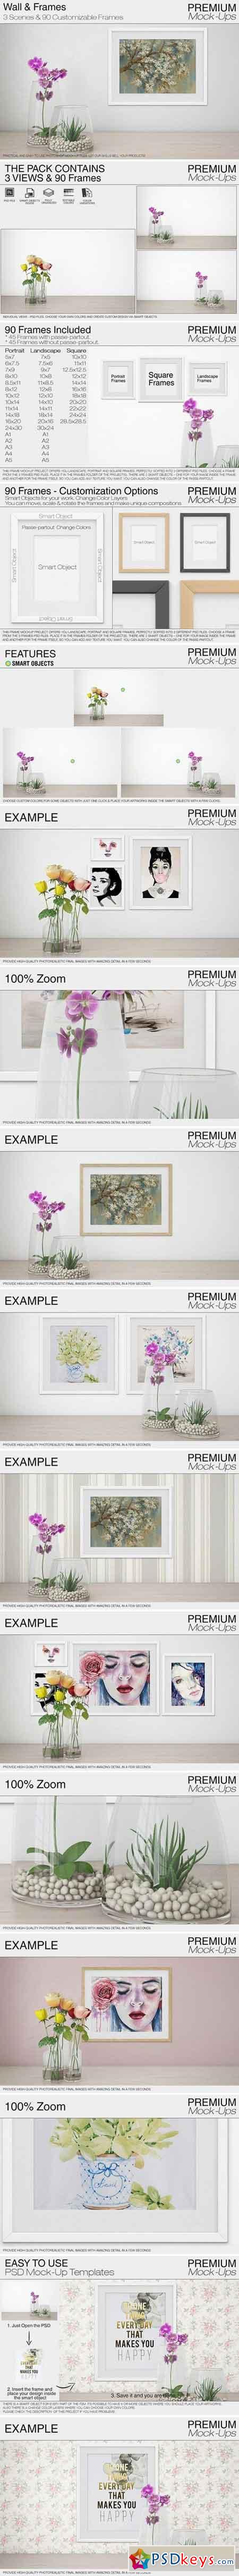 Wall & Frames Mockup - Orchid 2213306